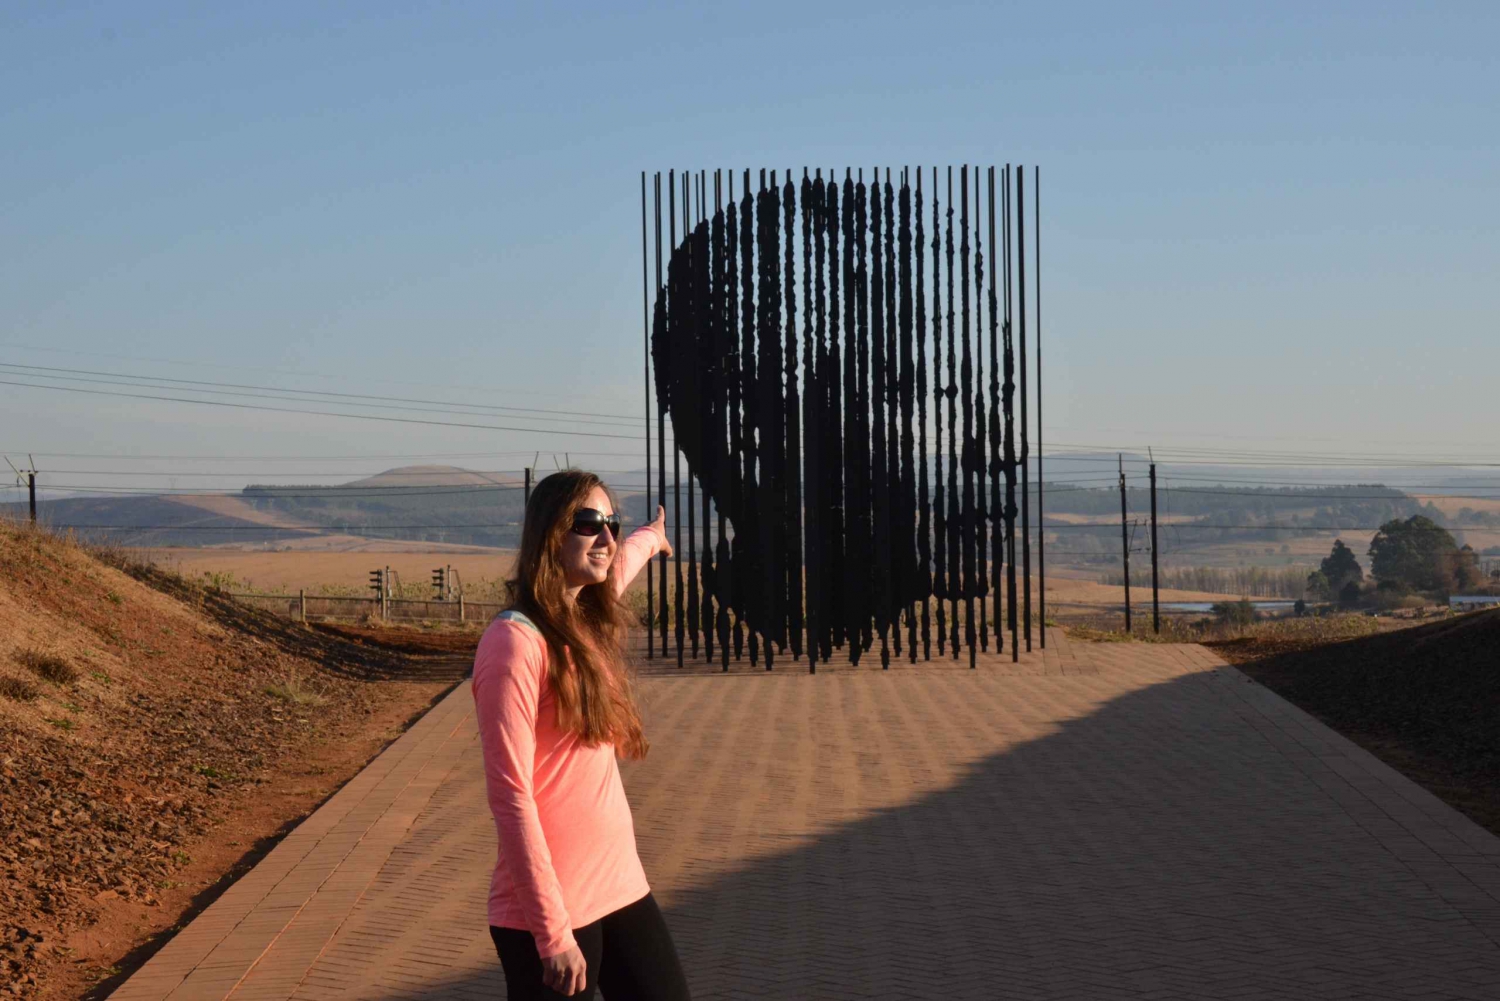 Durban: Mandela Capture Site & Howick Falls Day Trip